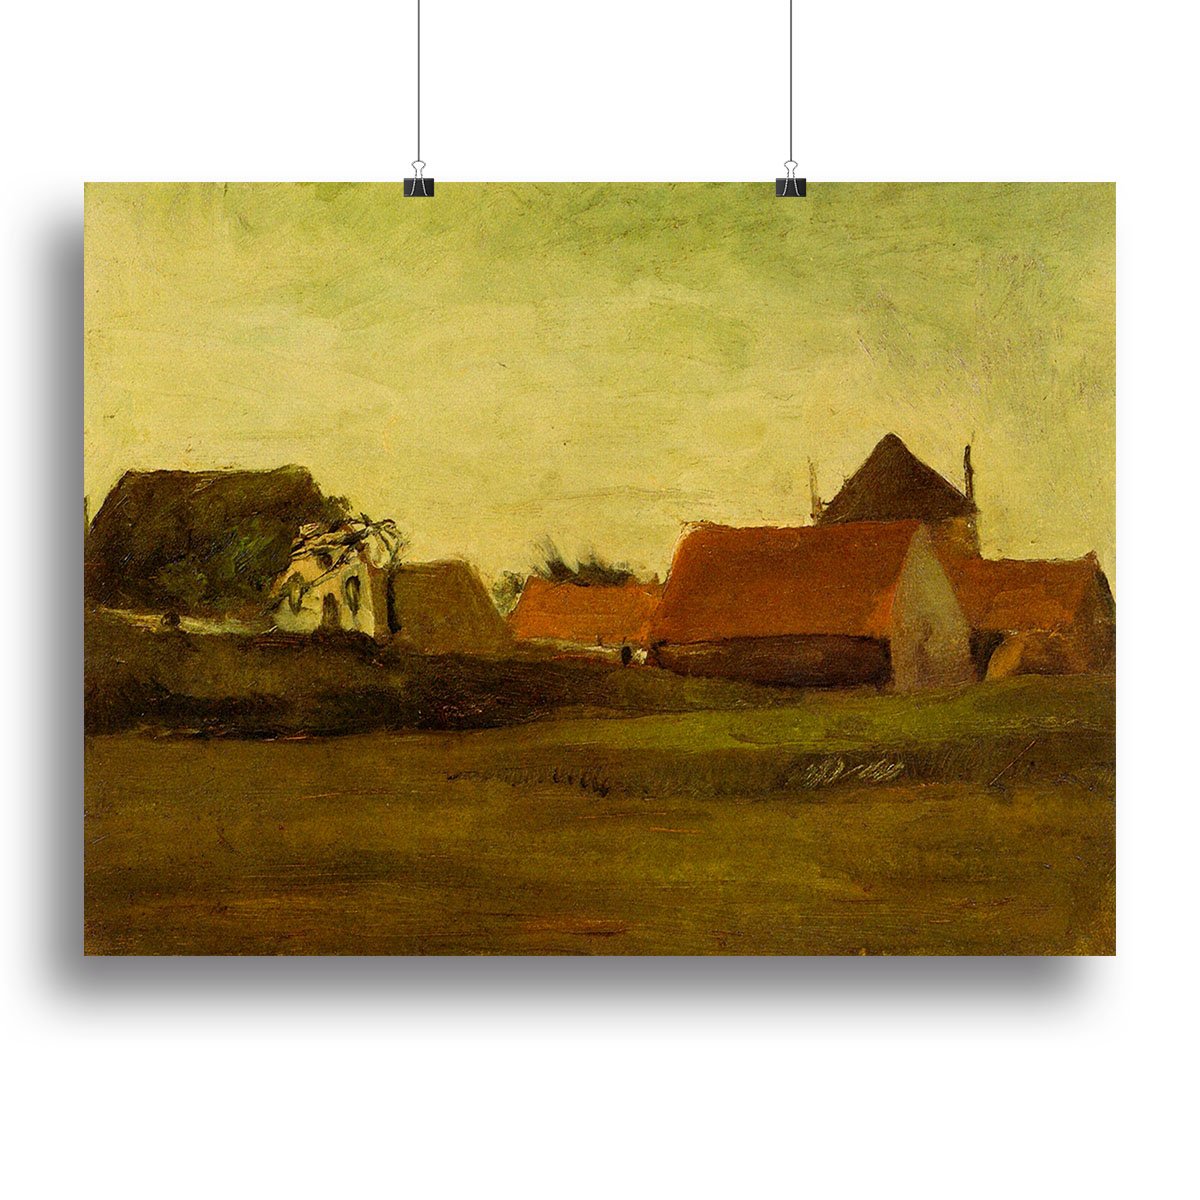 Farmhouses in Loosduinen near The Hague at Twilight by Van Gogh Canvas Print or Poster